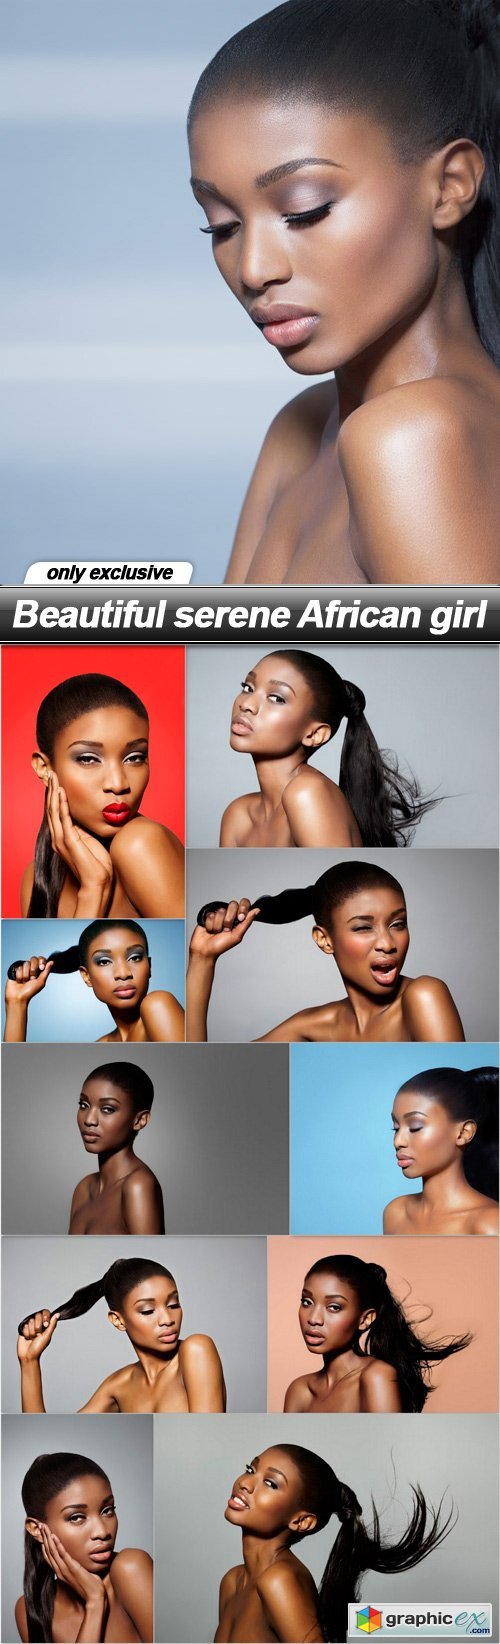 Beautiful serene African girl - 11 UHQ JPEG